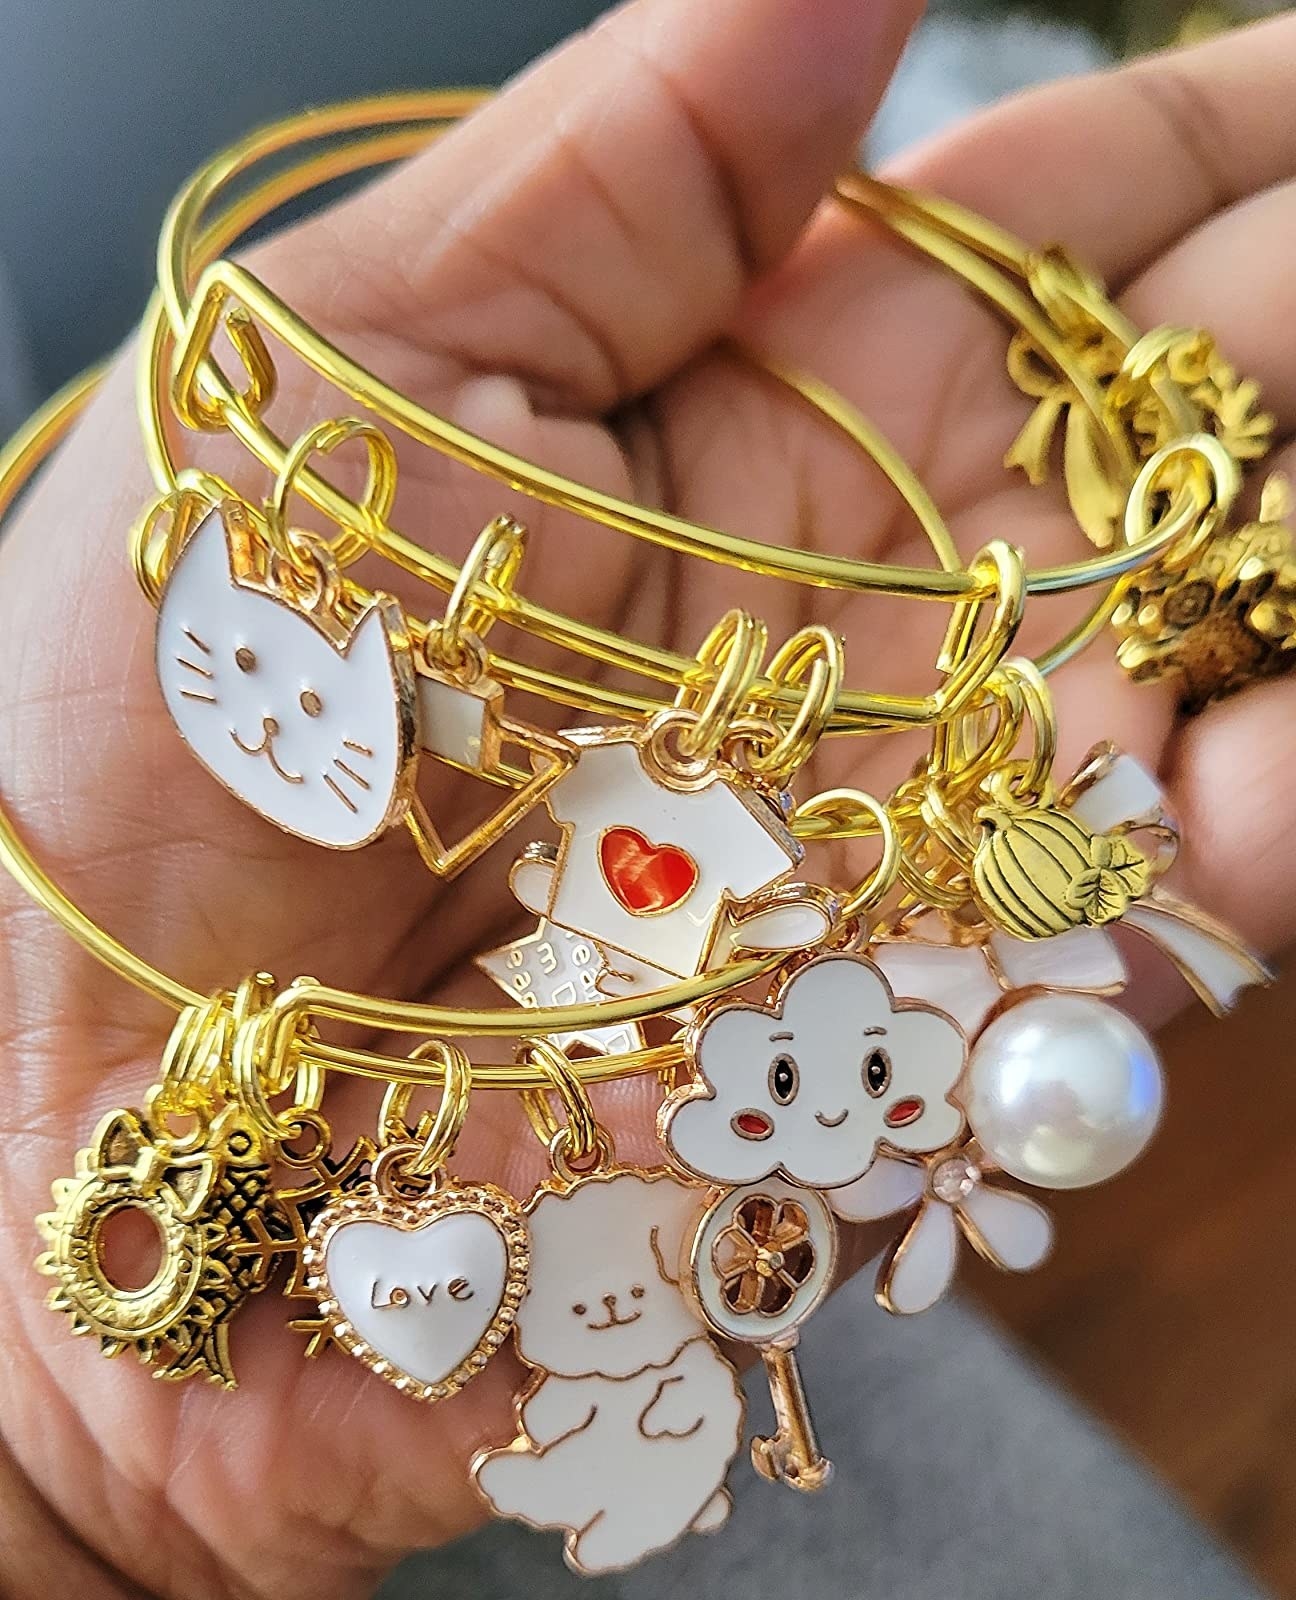 Details more than 81 high quality charm bracelets latest